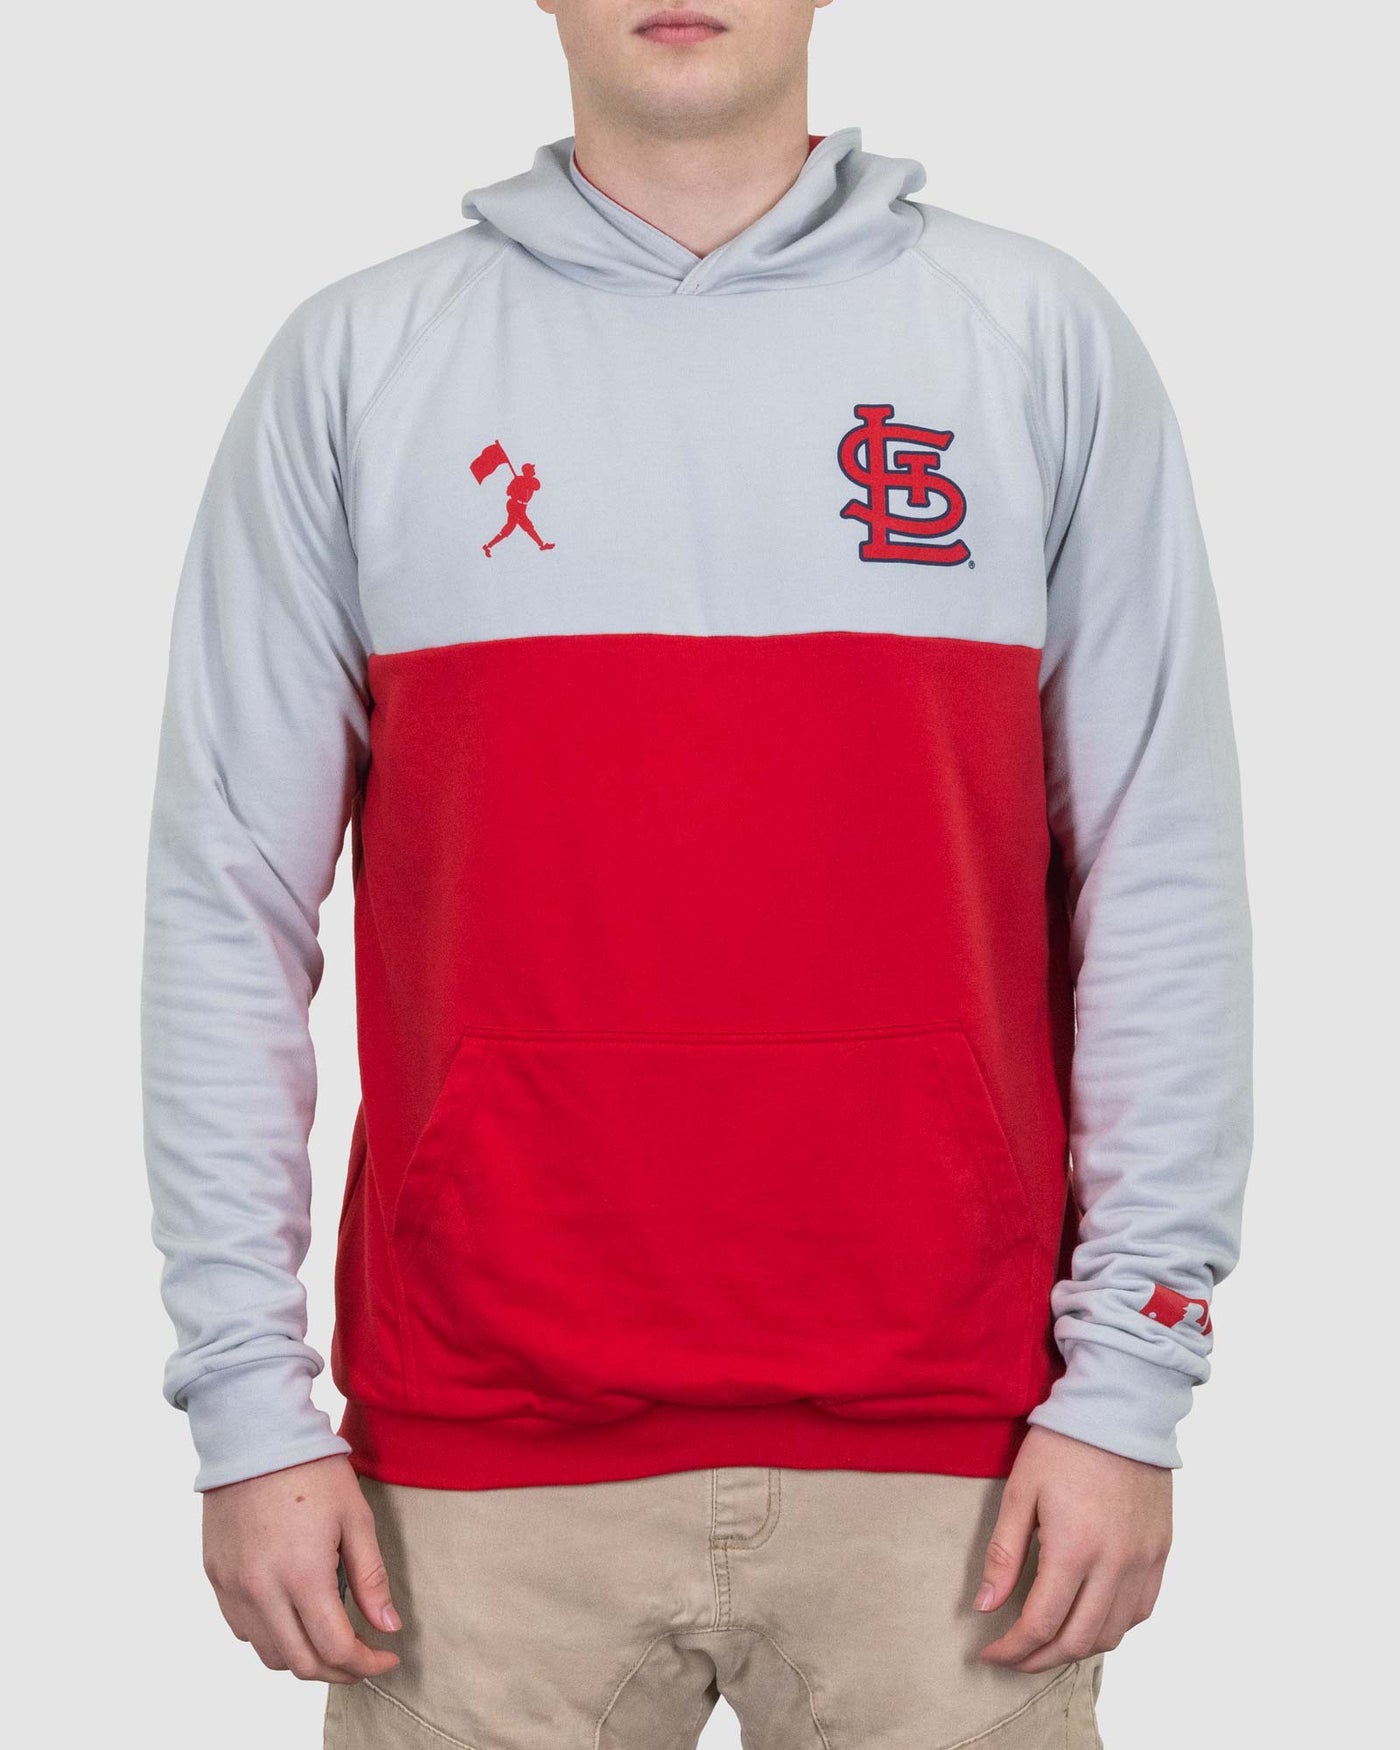 st louis cardinals baseball hoodie mens